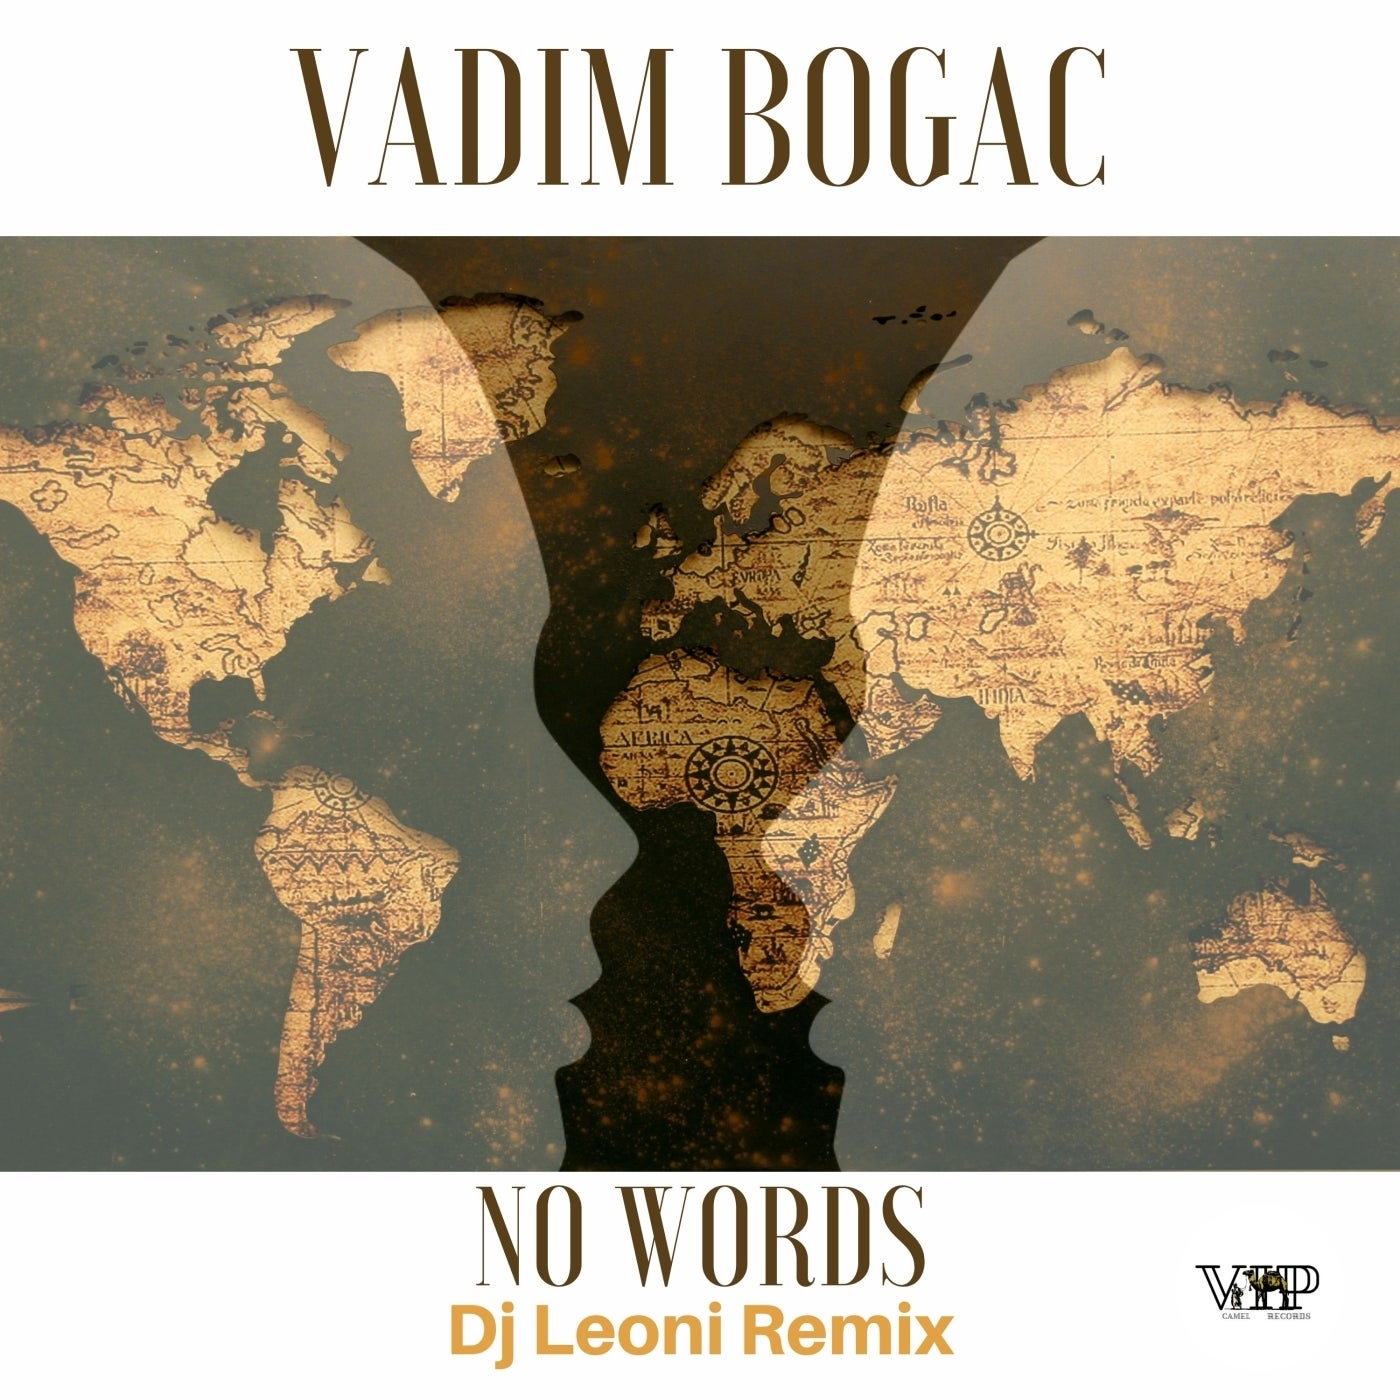 Vadim Bogac, CamelVIP – No Words (Dj Leoni Remix) [CVIP018B]